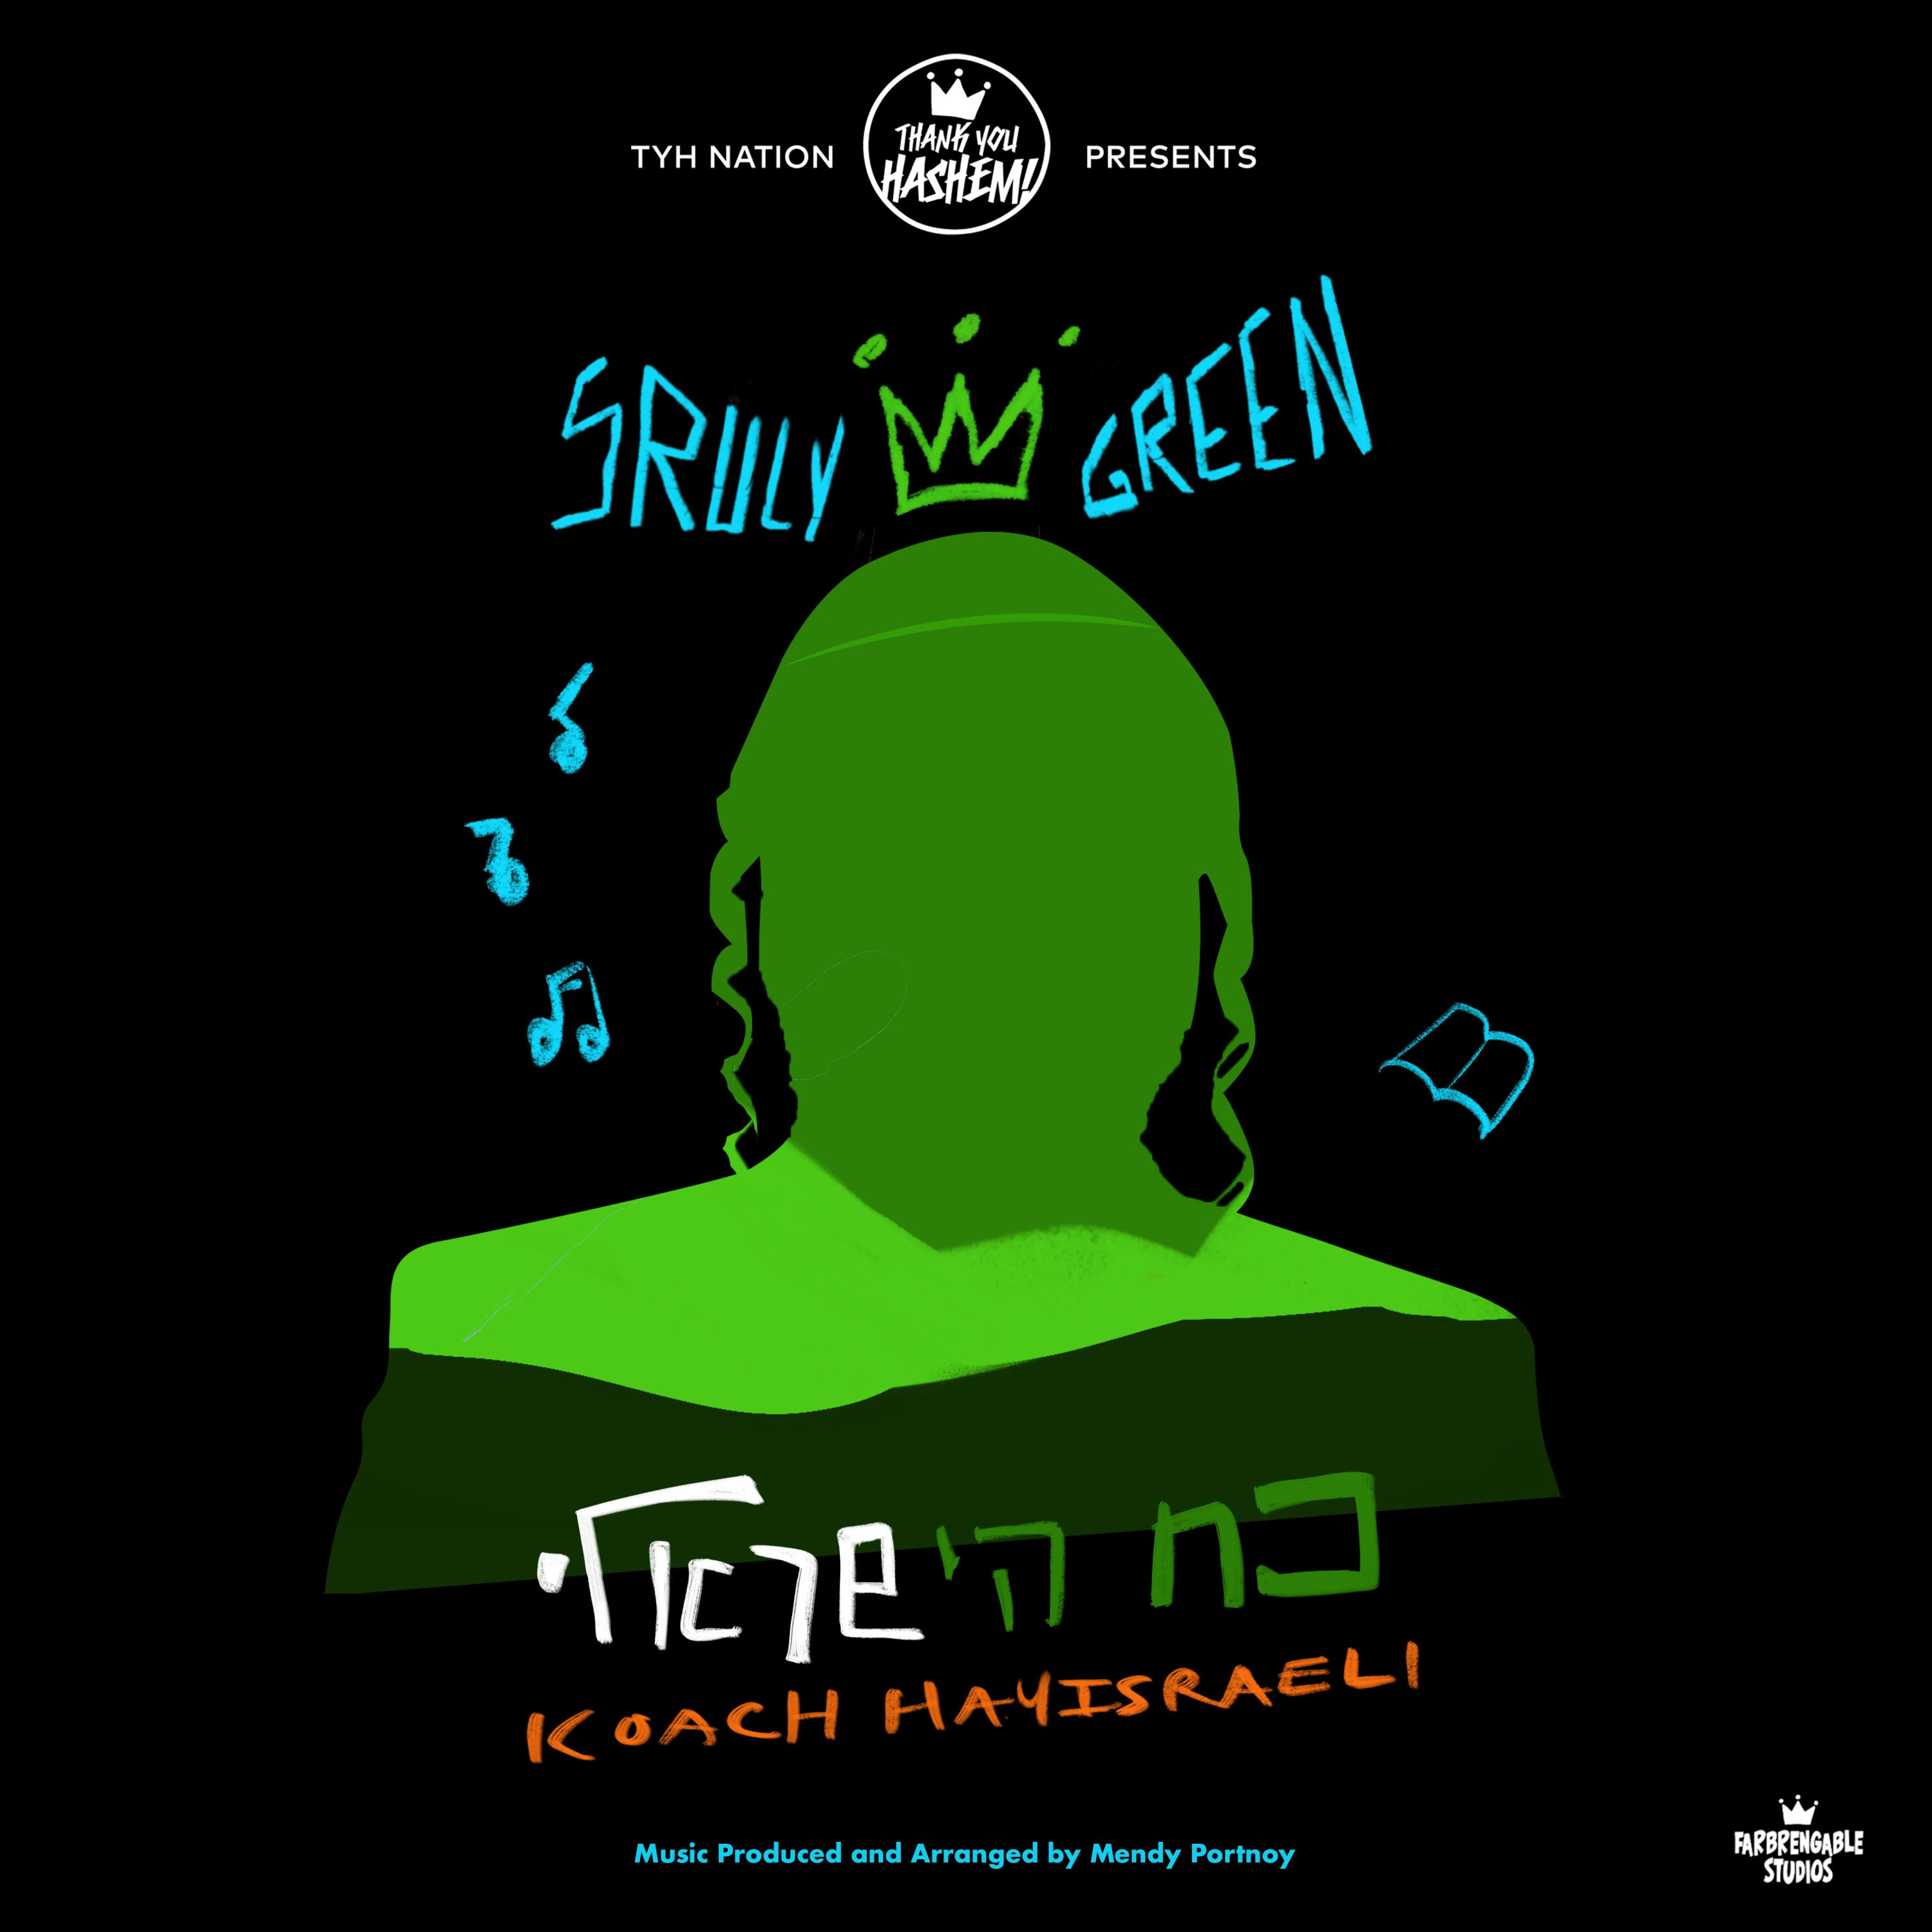 Sruly Green - Koach Hayisraeli